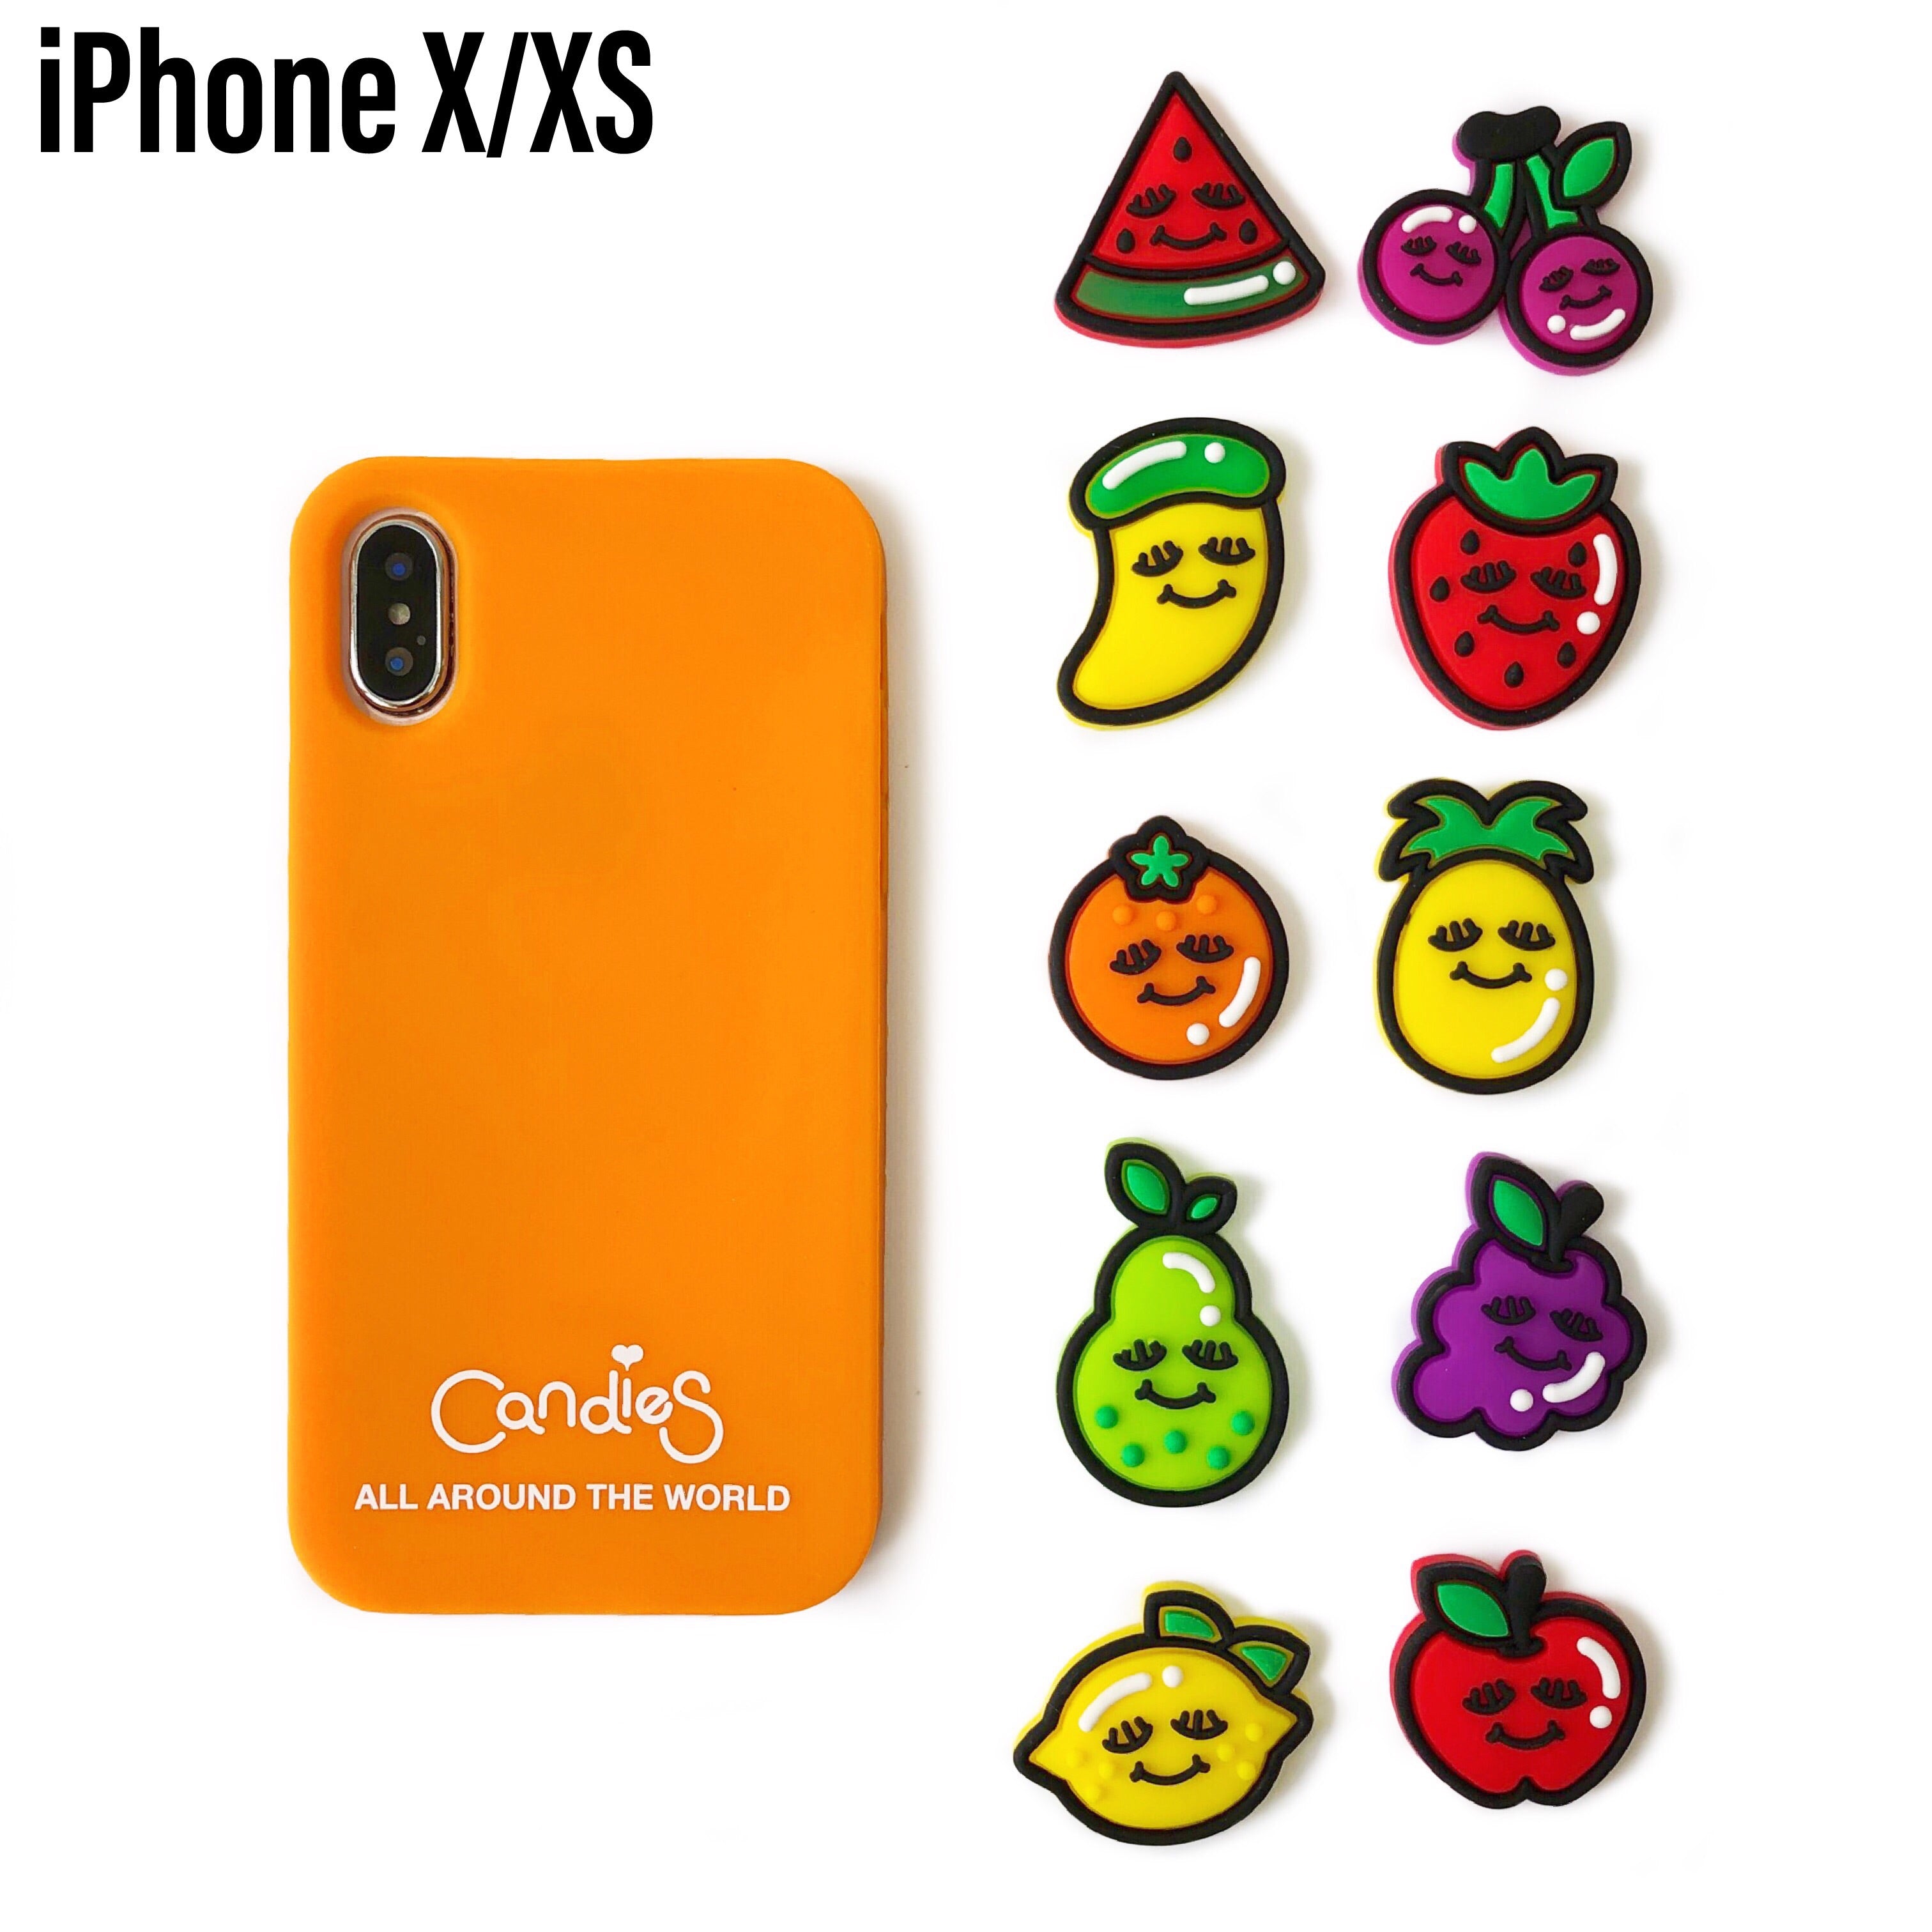 Candies | iPhone X/XS Cases